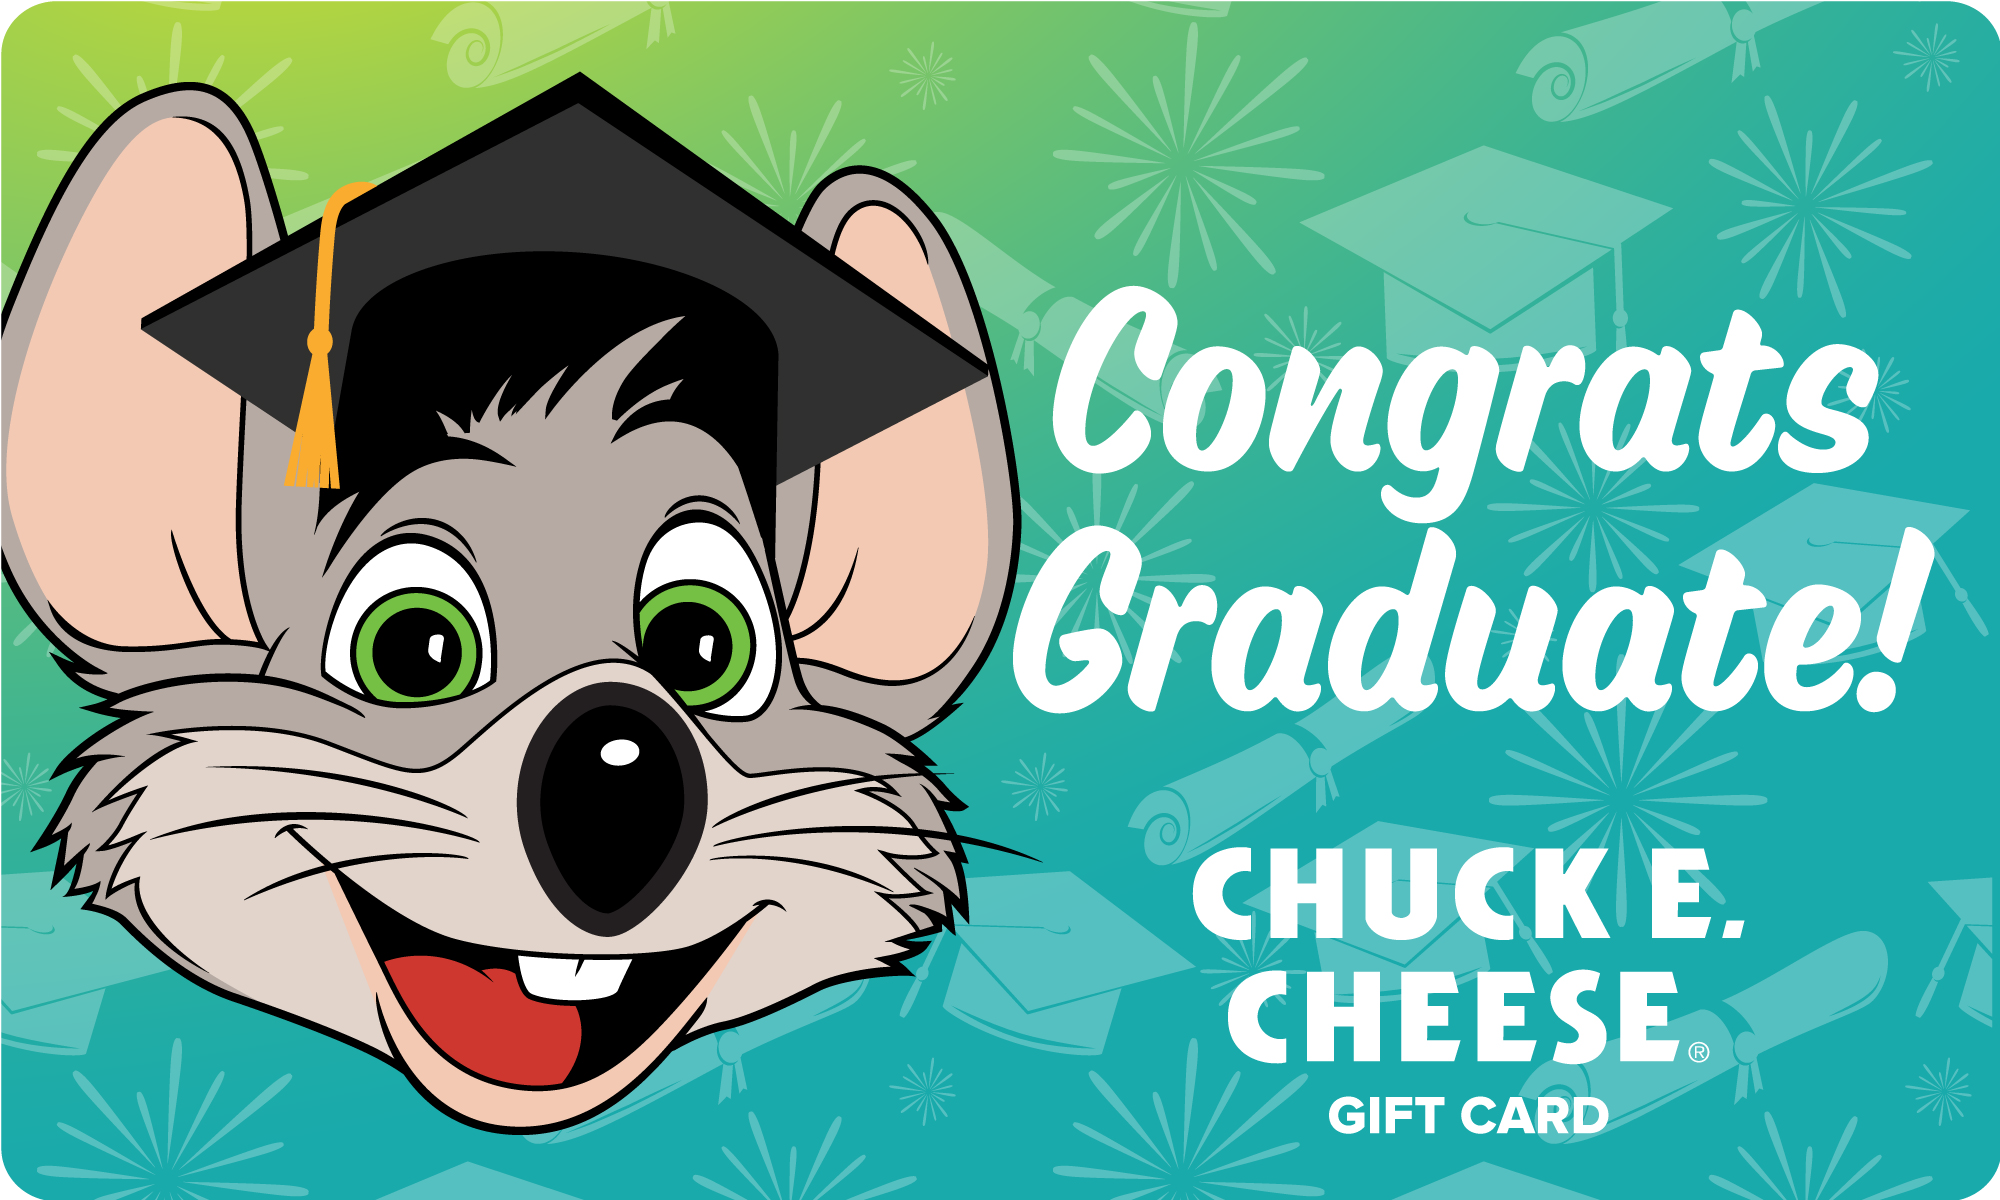 "Congrats Graduate!" Gift card